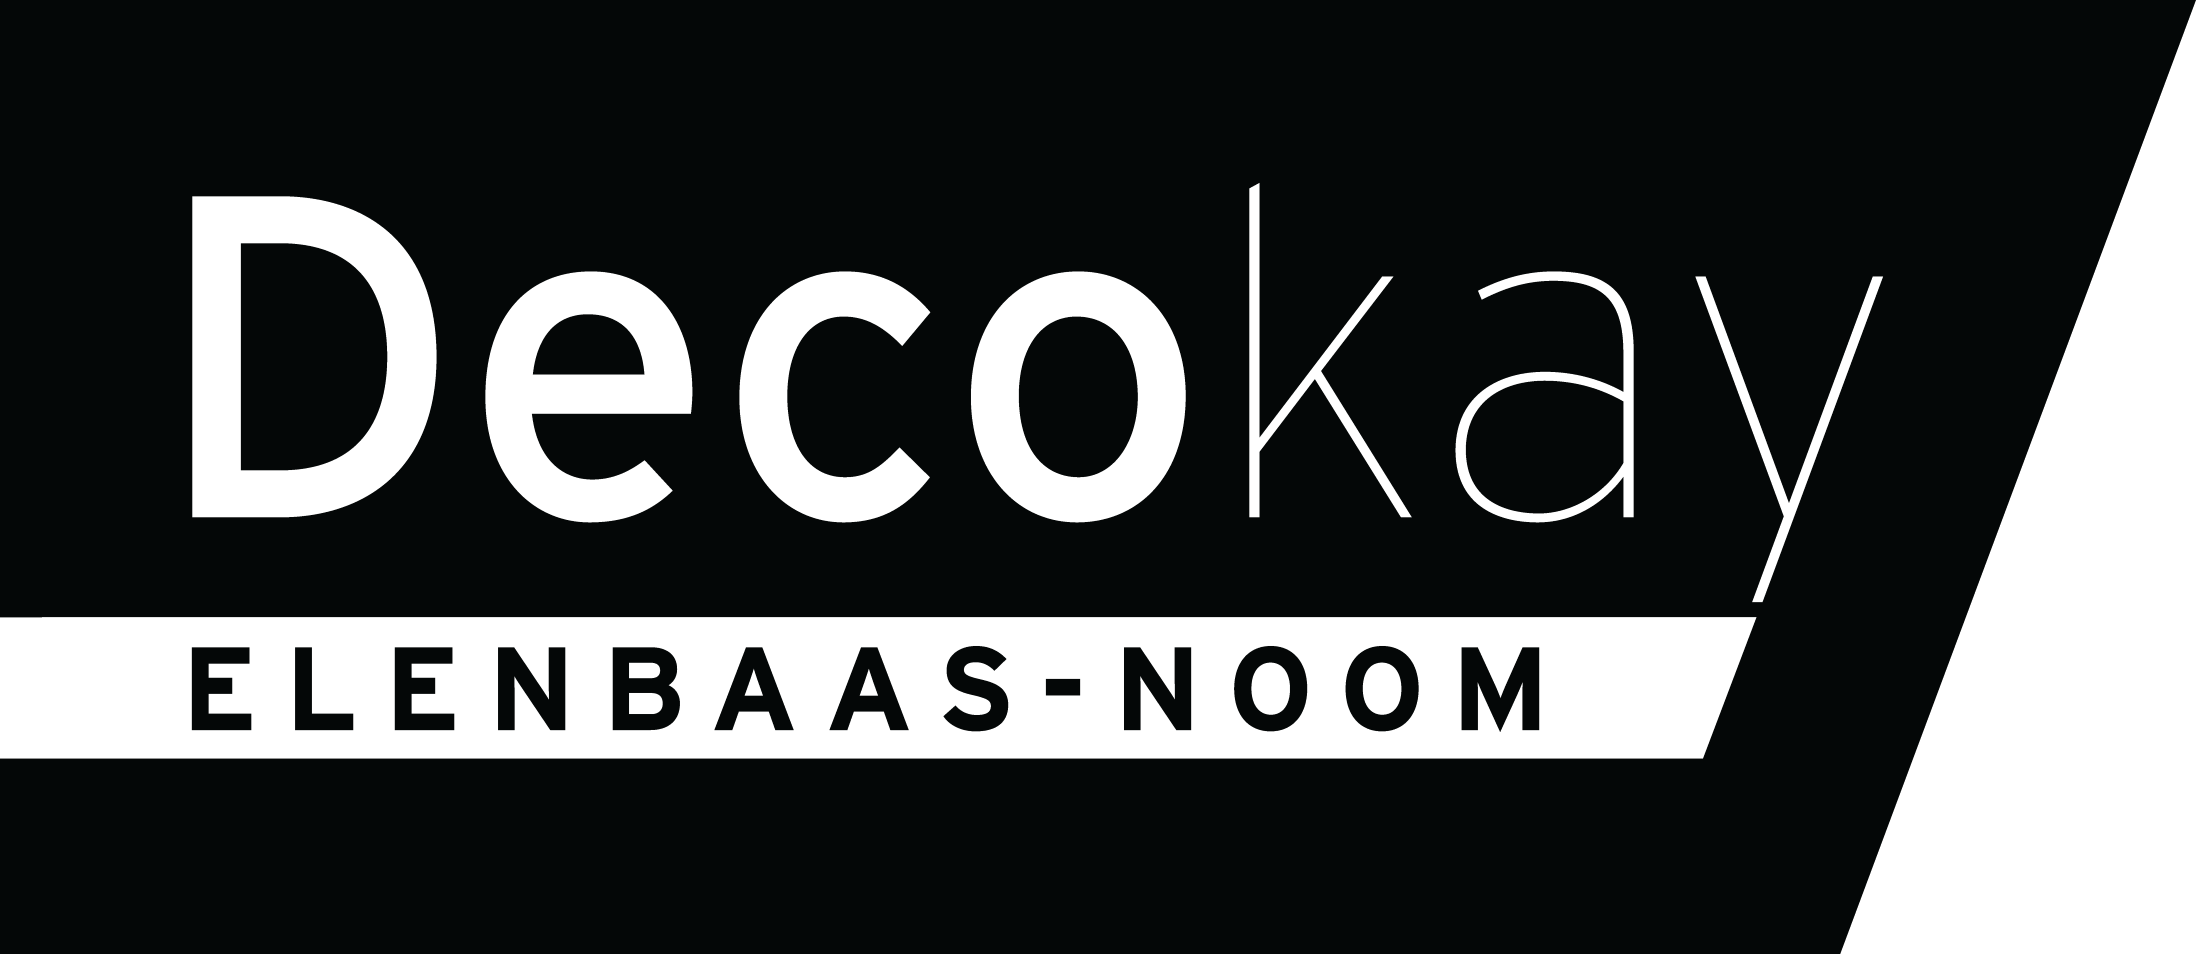 Logo Decokay Elenbaas - Noom